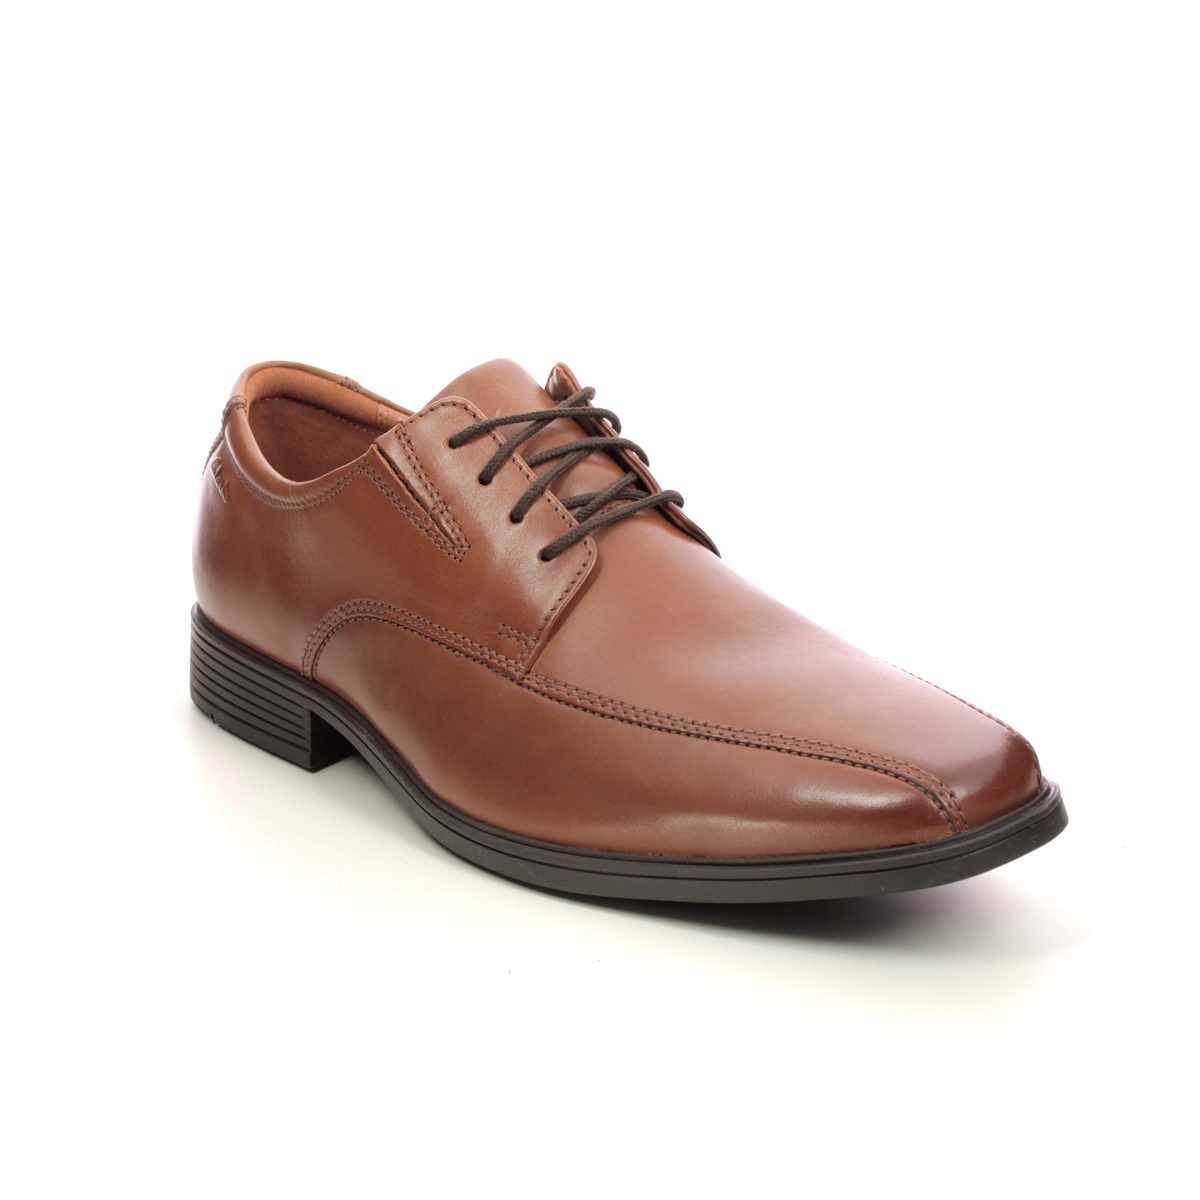 Clarks Tilden Walk Dark Tan Mens Formal Shoes 300958H In Size 12 In Plain Dark Tan H Width Fitting Extra Wide